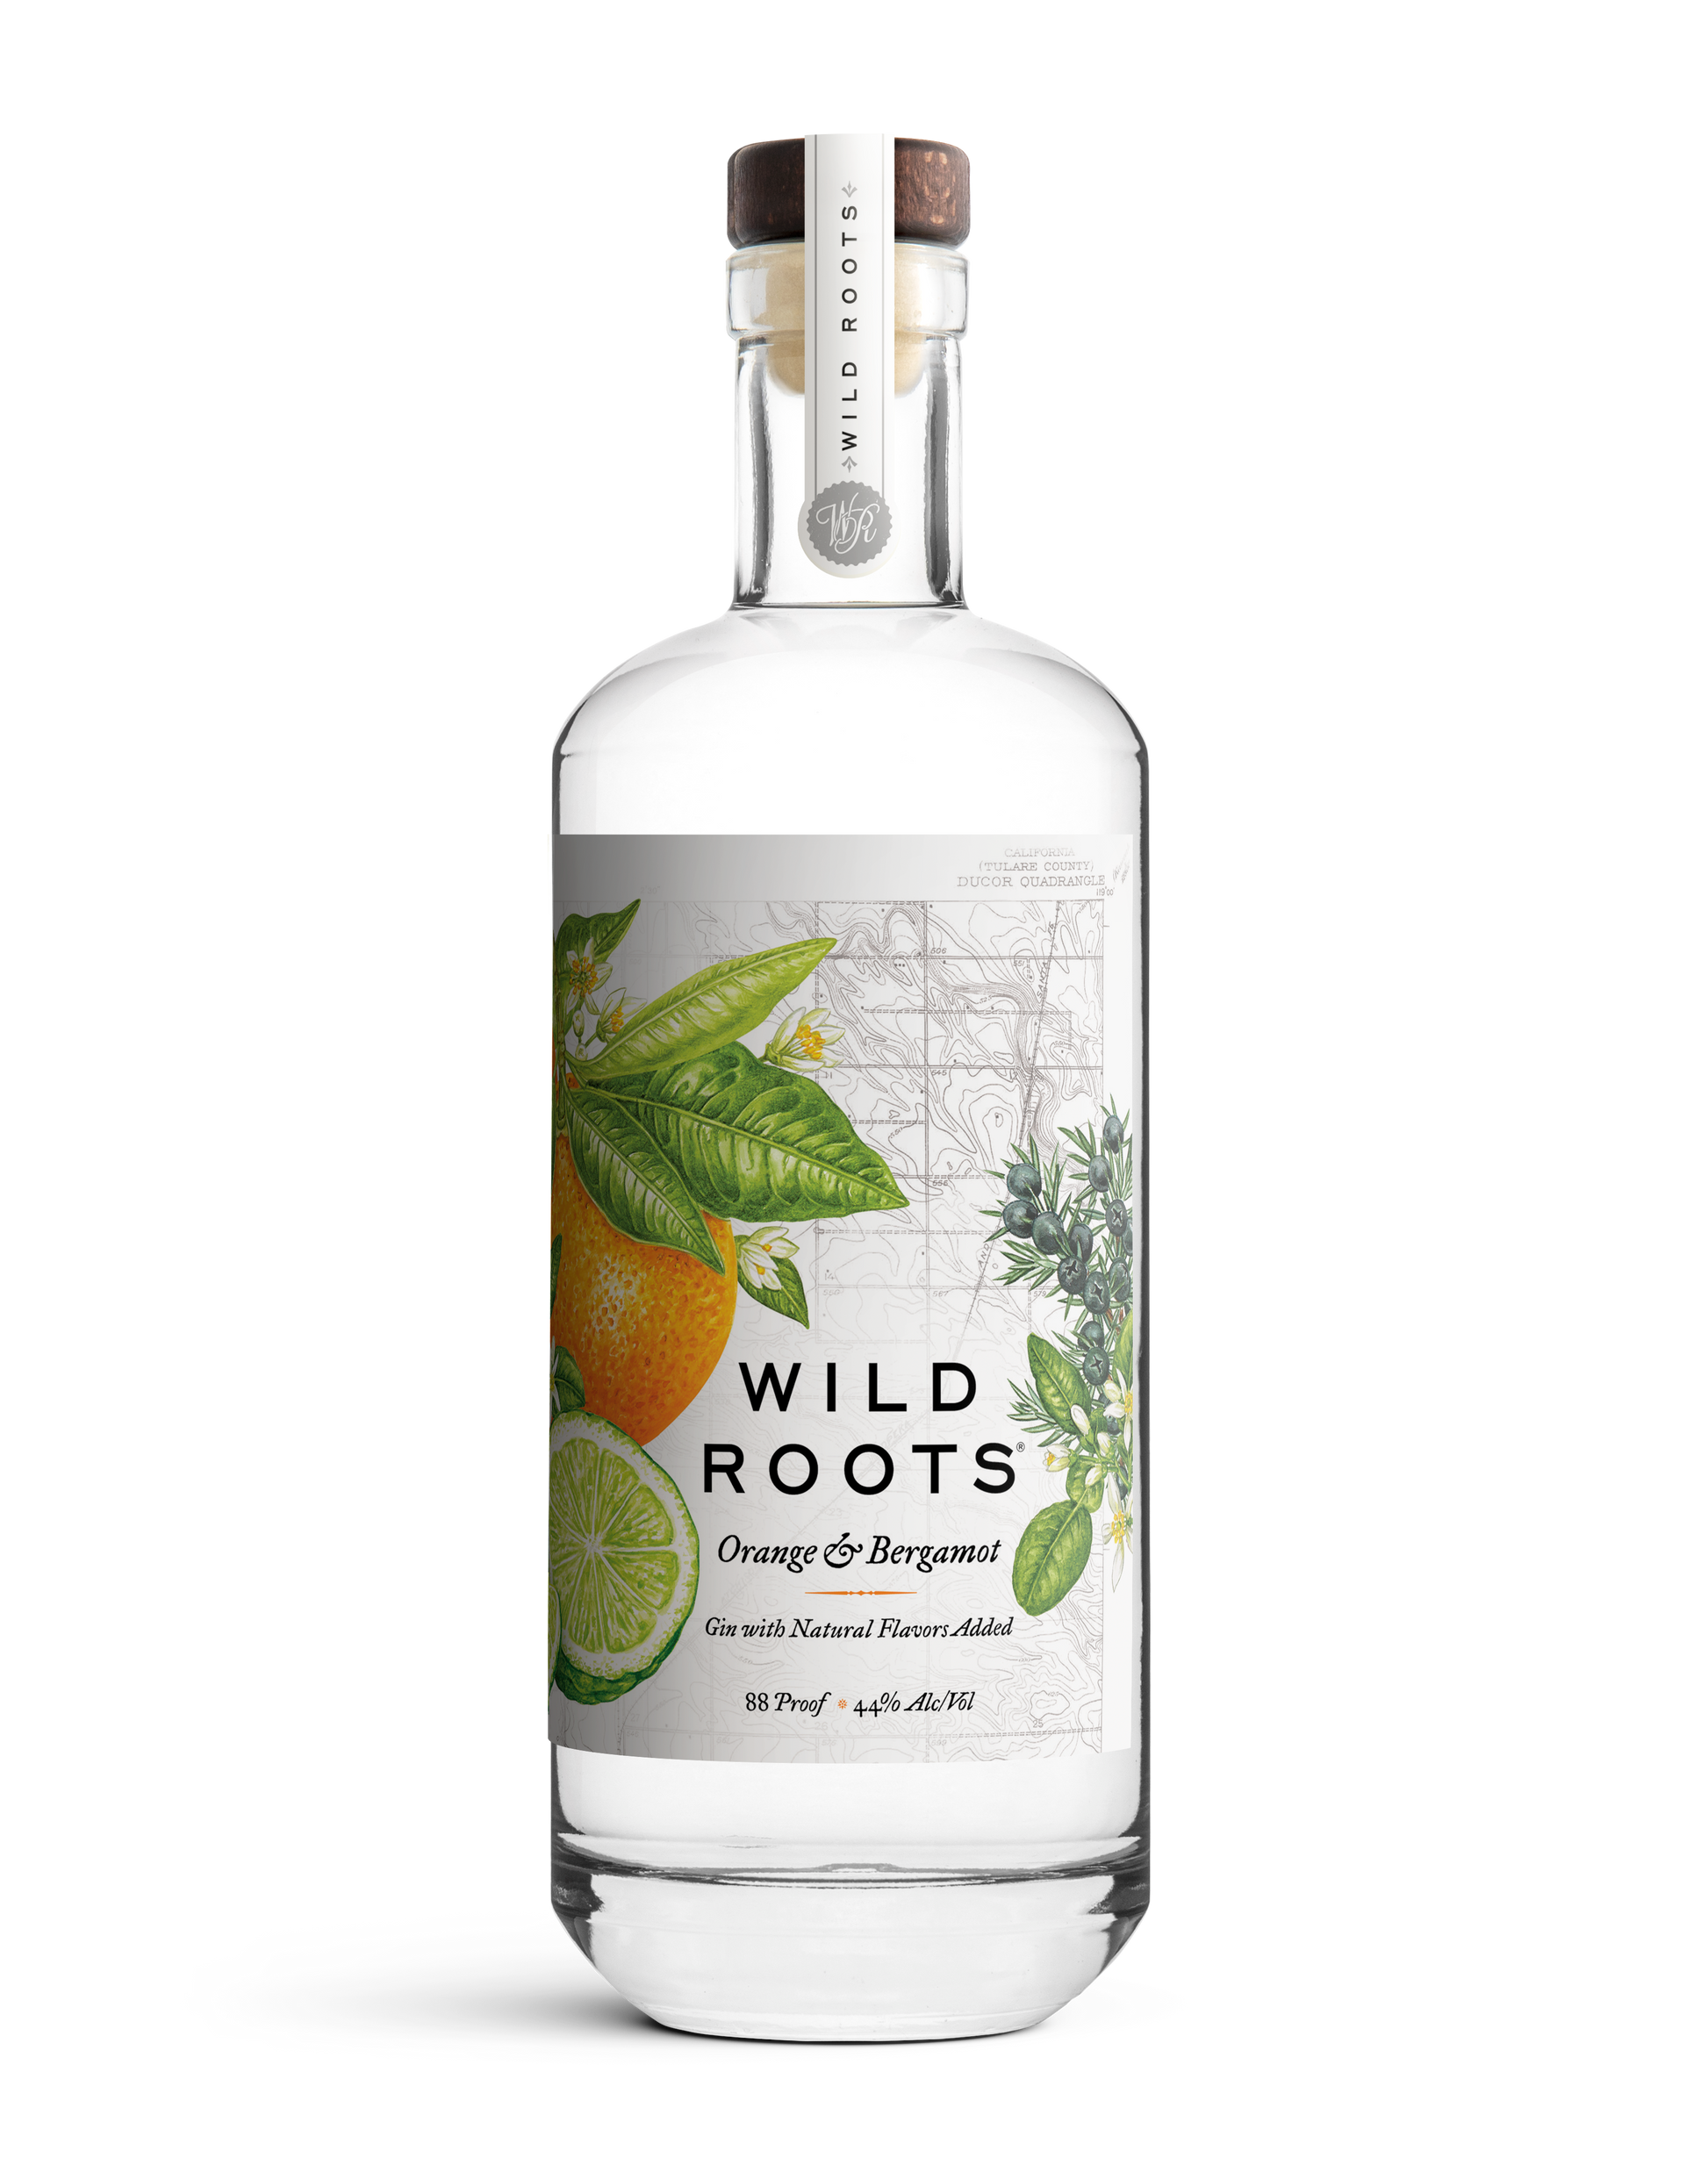 Orange & Bergamot Roots Wild – Gin